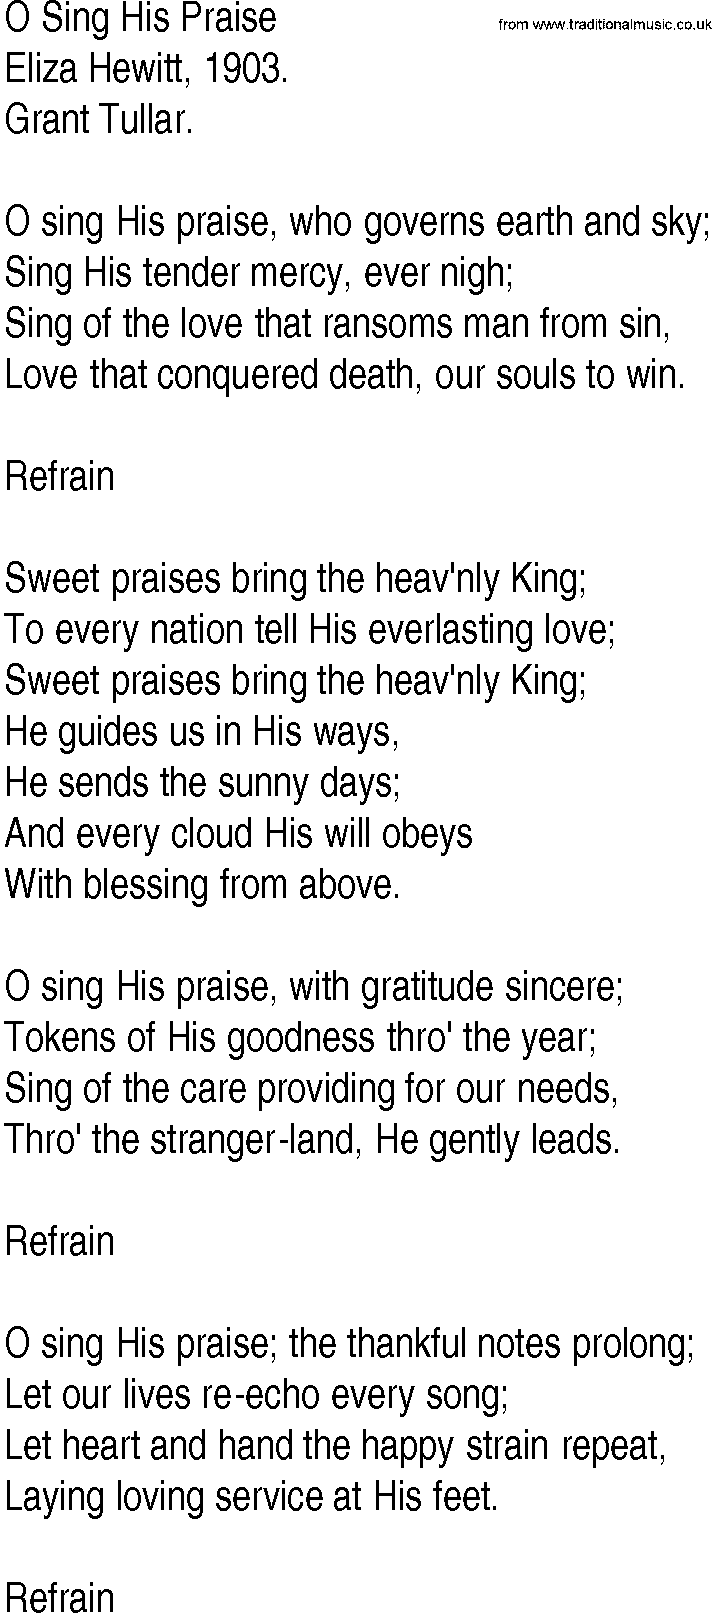 Hymn and Gospel Song: O Sing His Praise by Eliza Hewitt lyrics